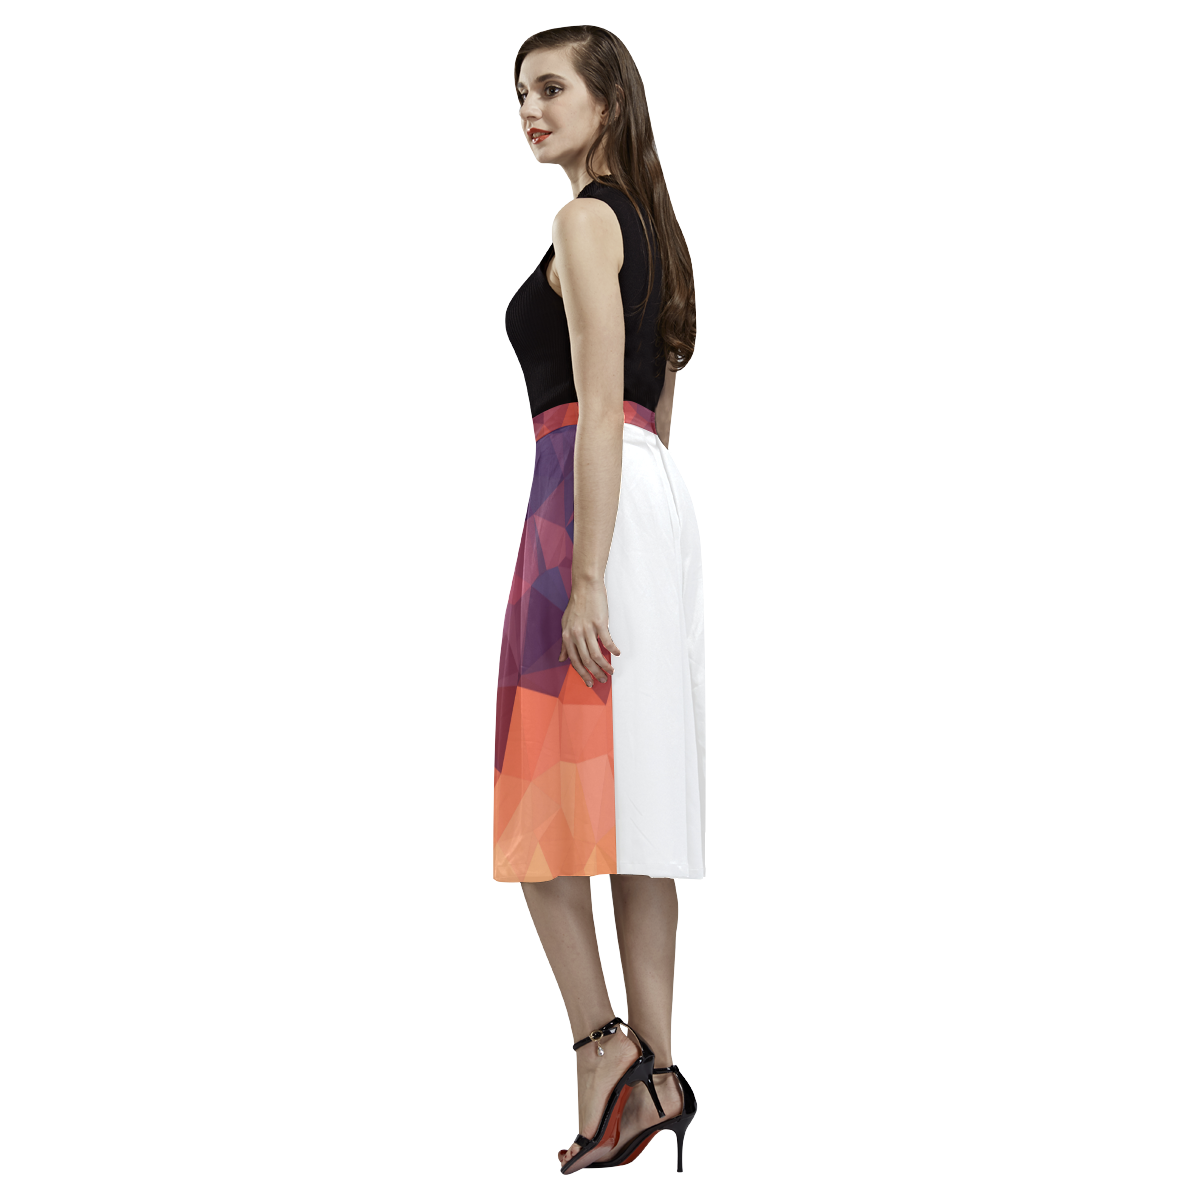 DESIGNERS CRYSTAL DRESS : BROWN Aoede Crepe Skirt (Model D16)